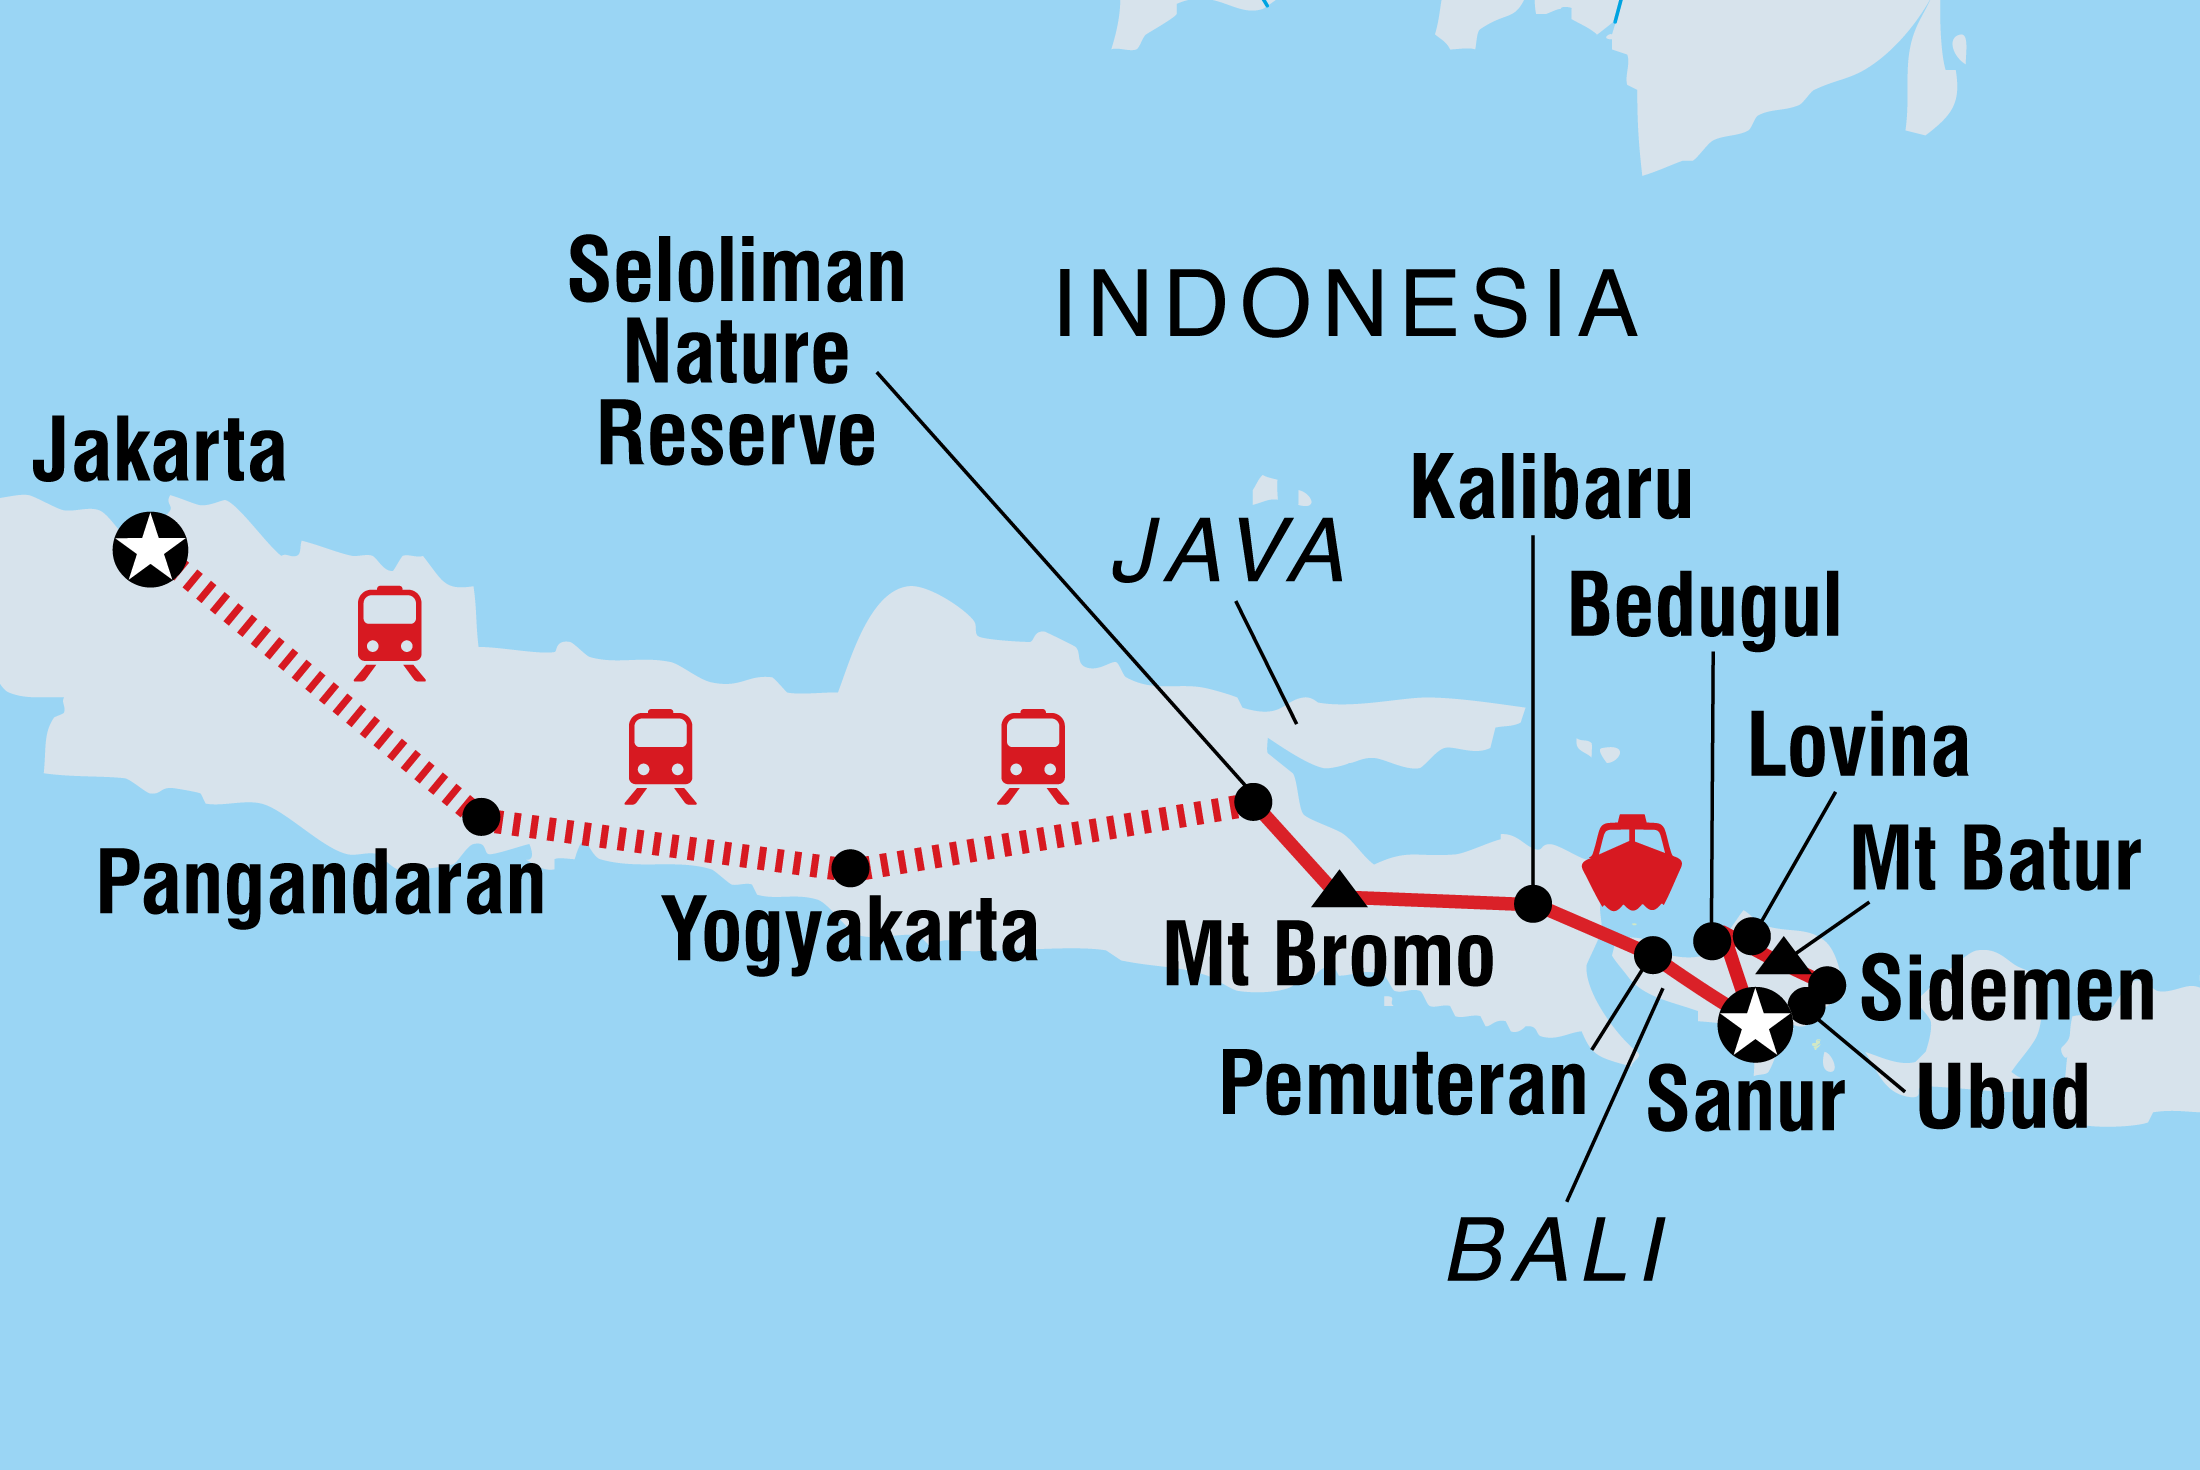 tourist map of java